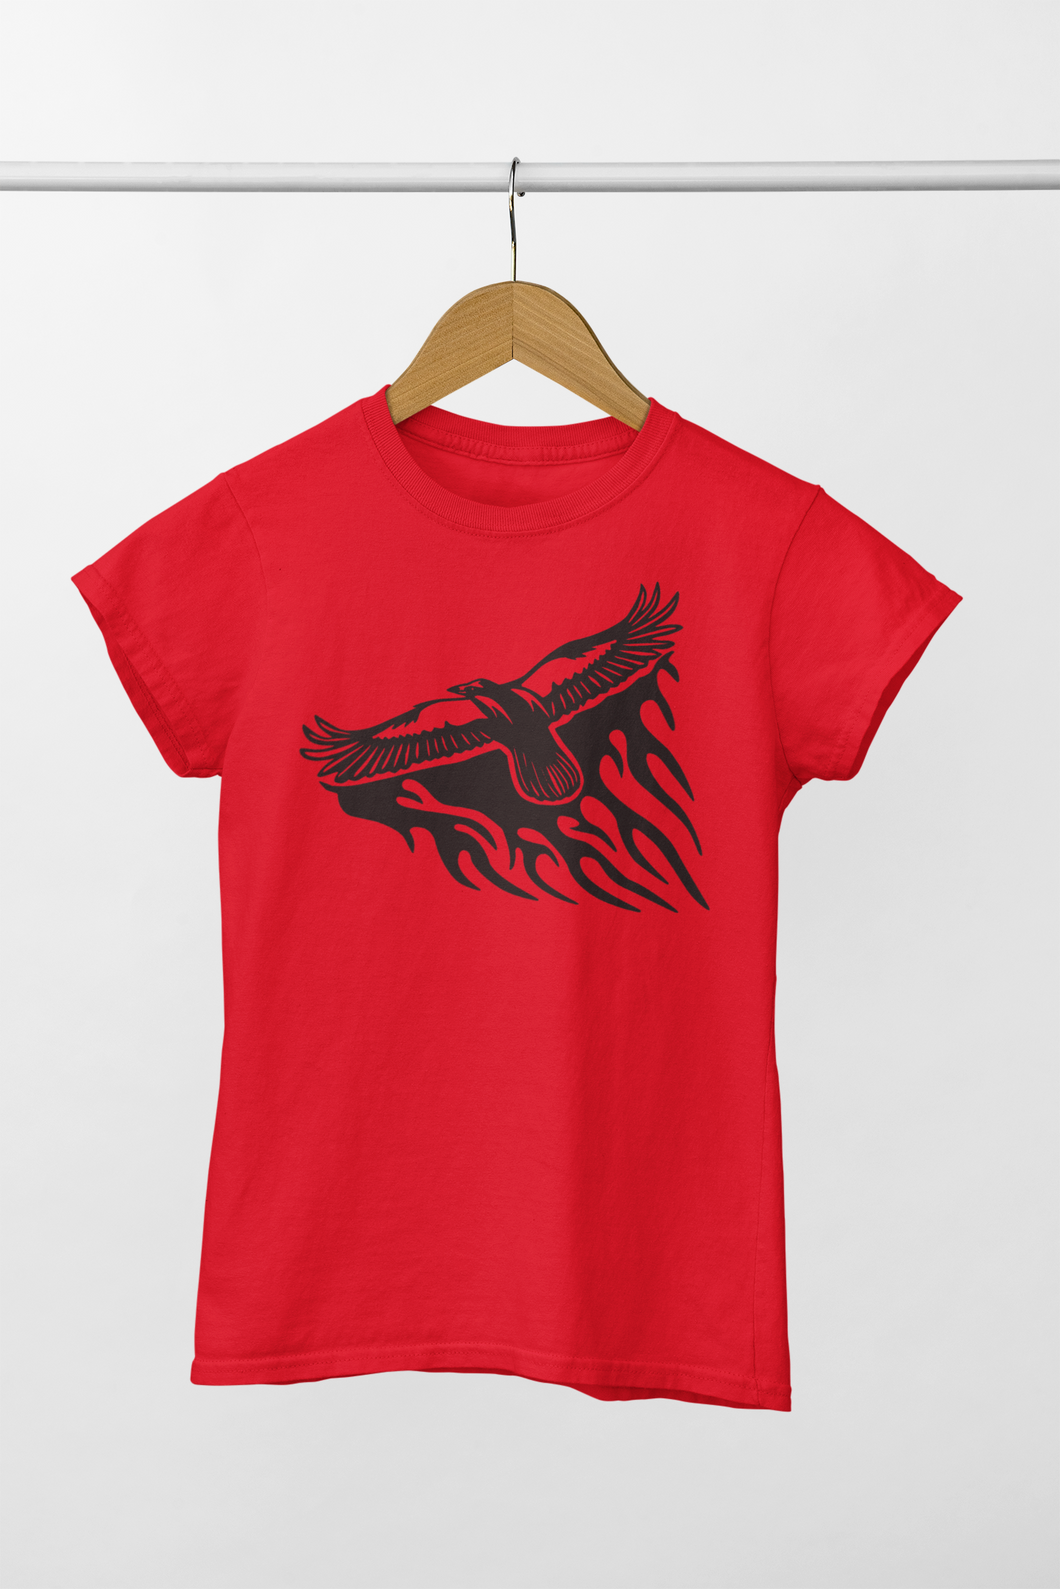 Flying eagle (Man T-shirt)